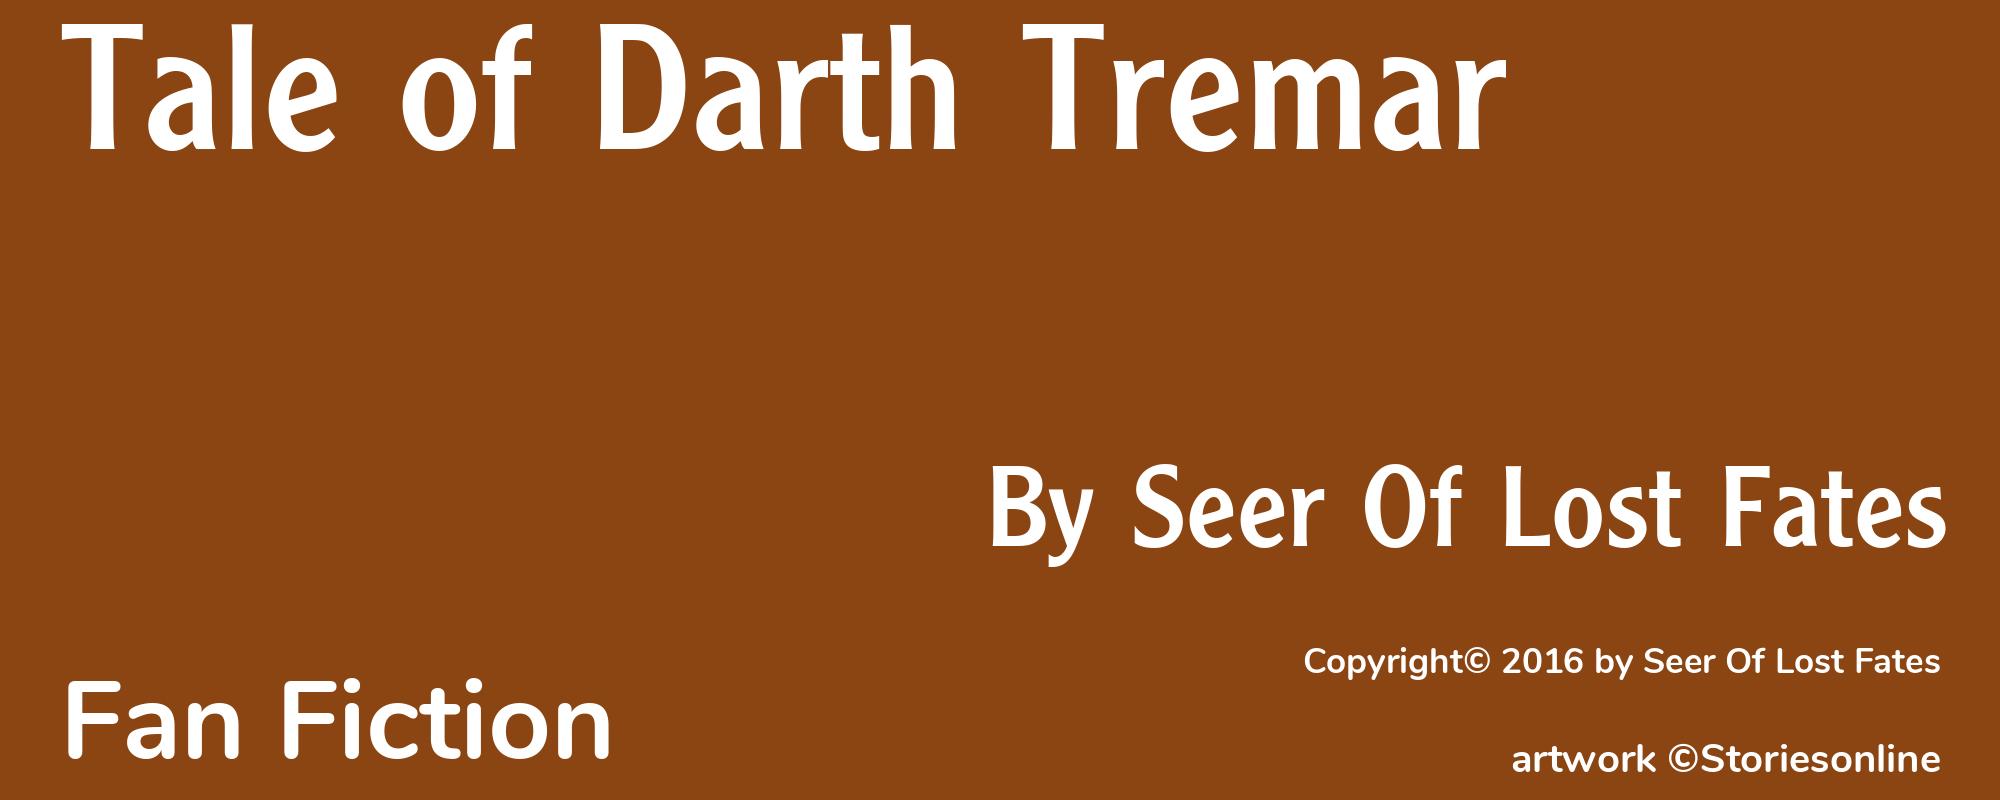 Tale of Darth Tremar - Cover